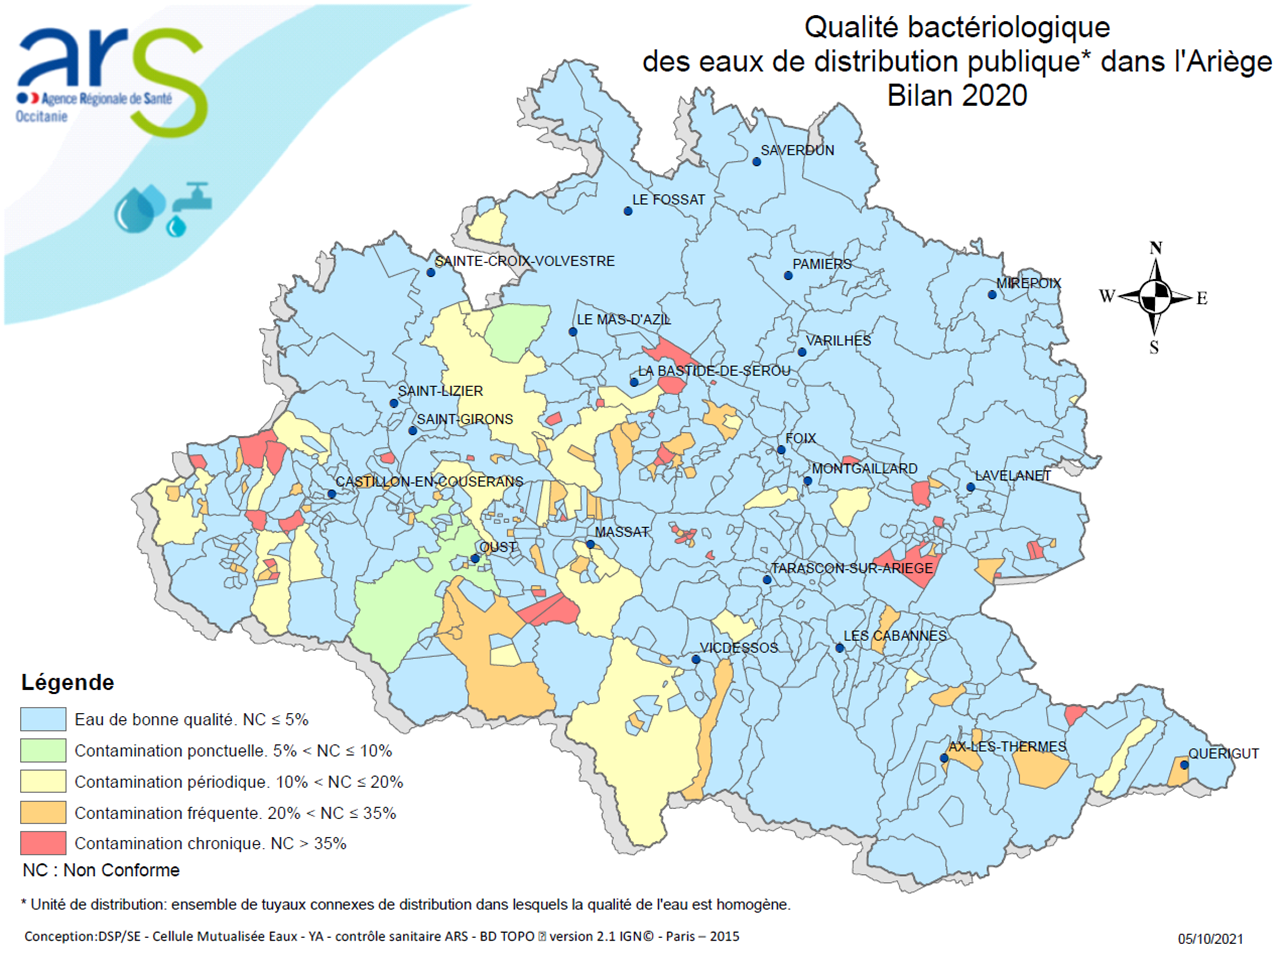 Bactériologie Ariège (Bilan eau 2020)